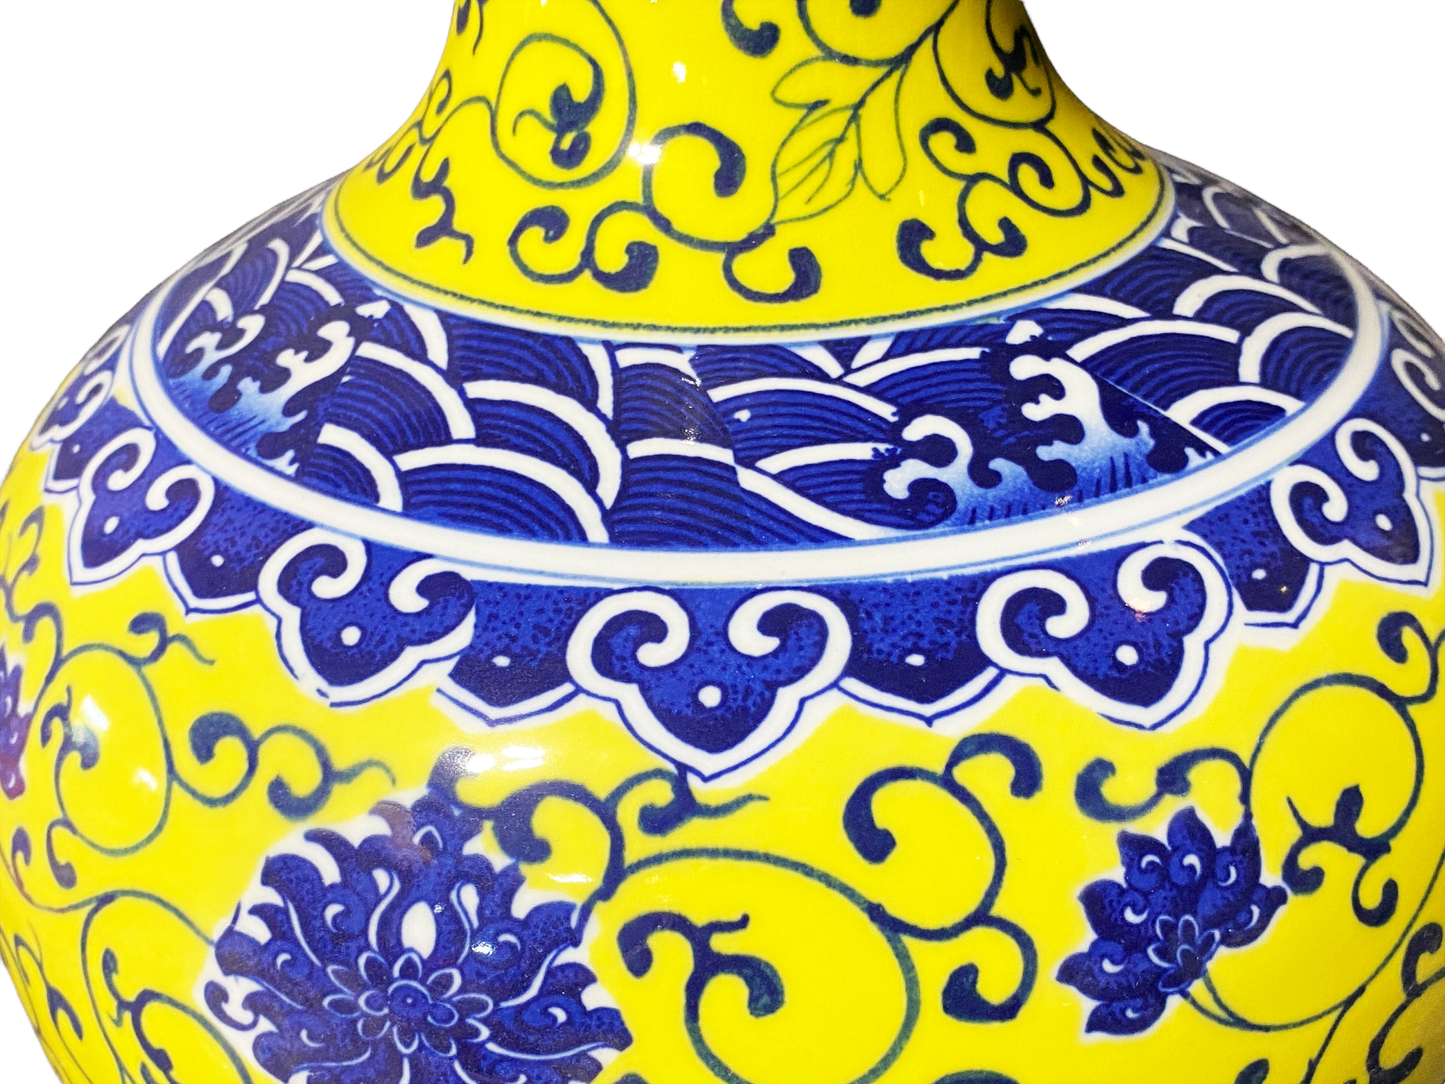 #4735 Chinoiserie Famille Jaune Porcelain Onion Shape Vase